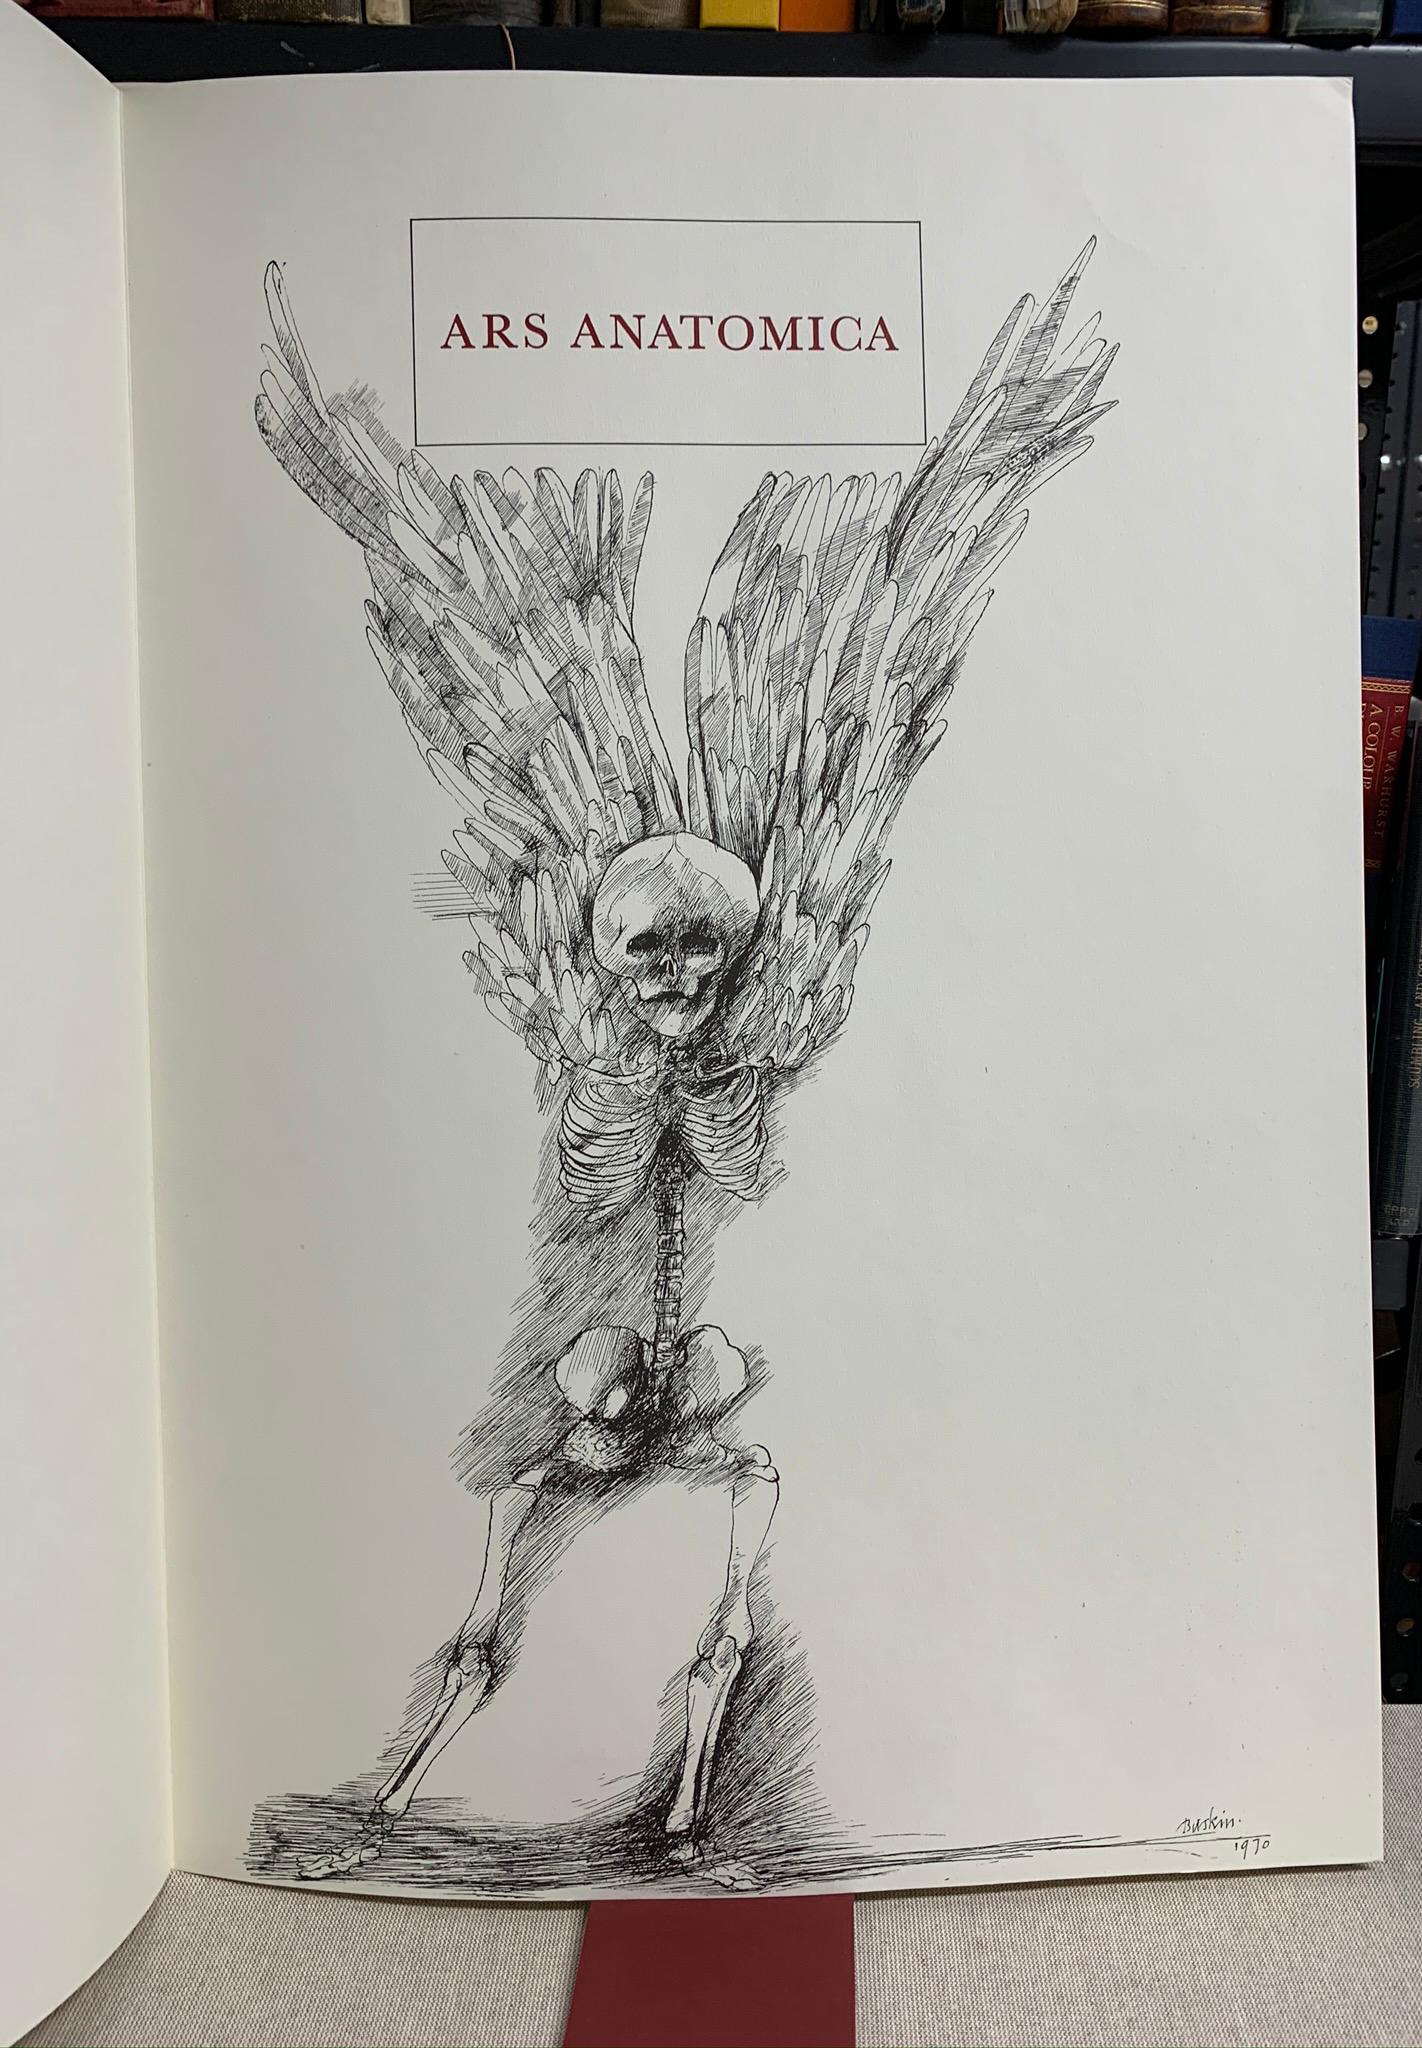 Ars Anatomica. A Medical Fantasia. - Art by Leonard Baskin